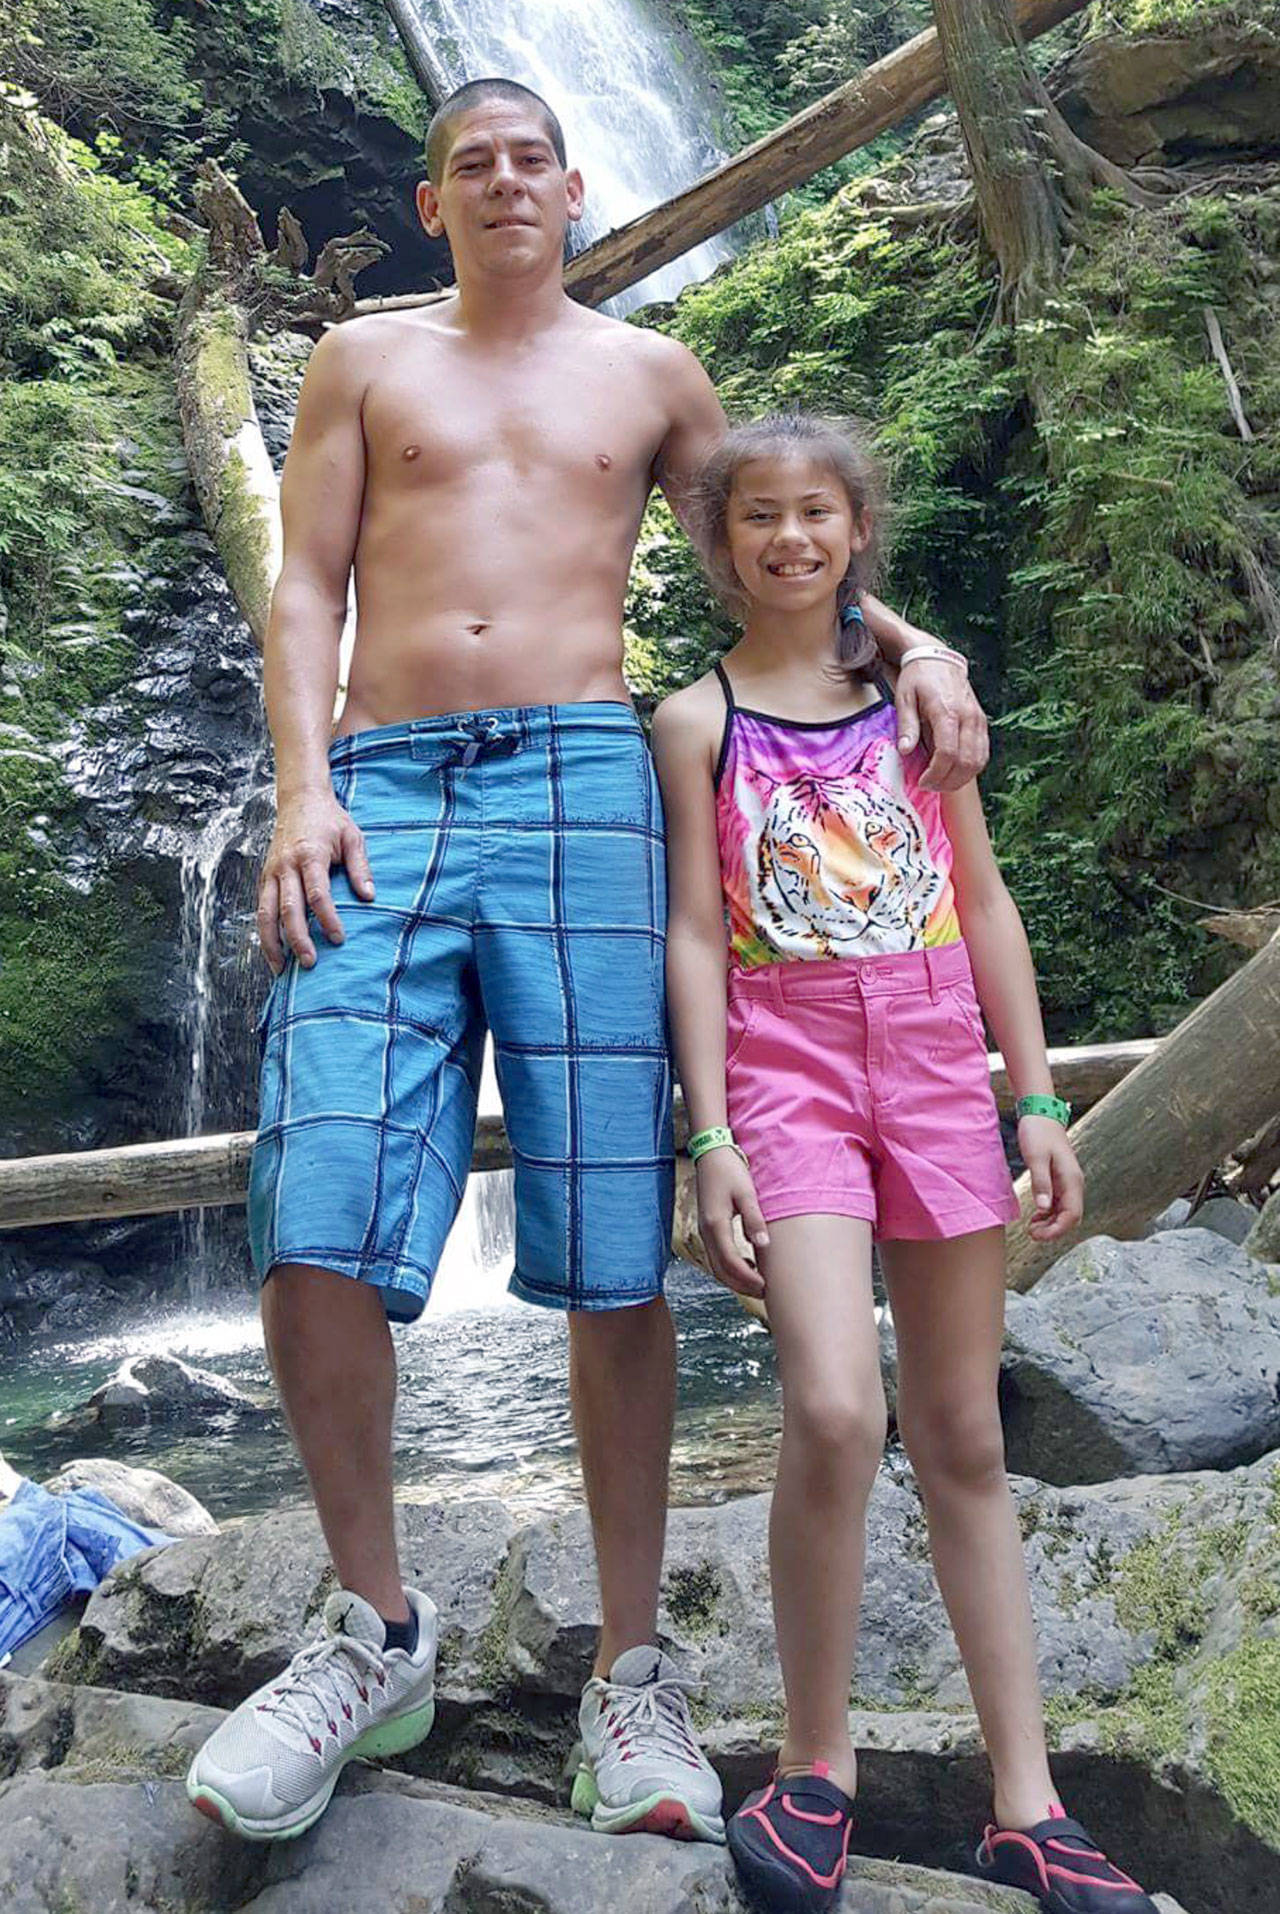 Jesse Cruz, 34, pictured here with little sister Vivianna Cruz, was reported missing Saturday after swimming in the Duckabush River near Brinnon. (David Ramirez)